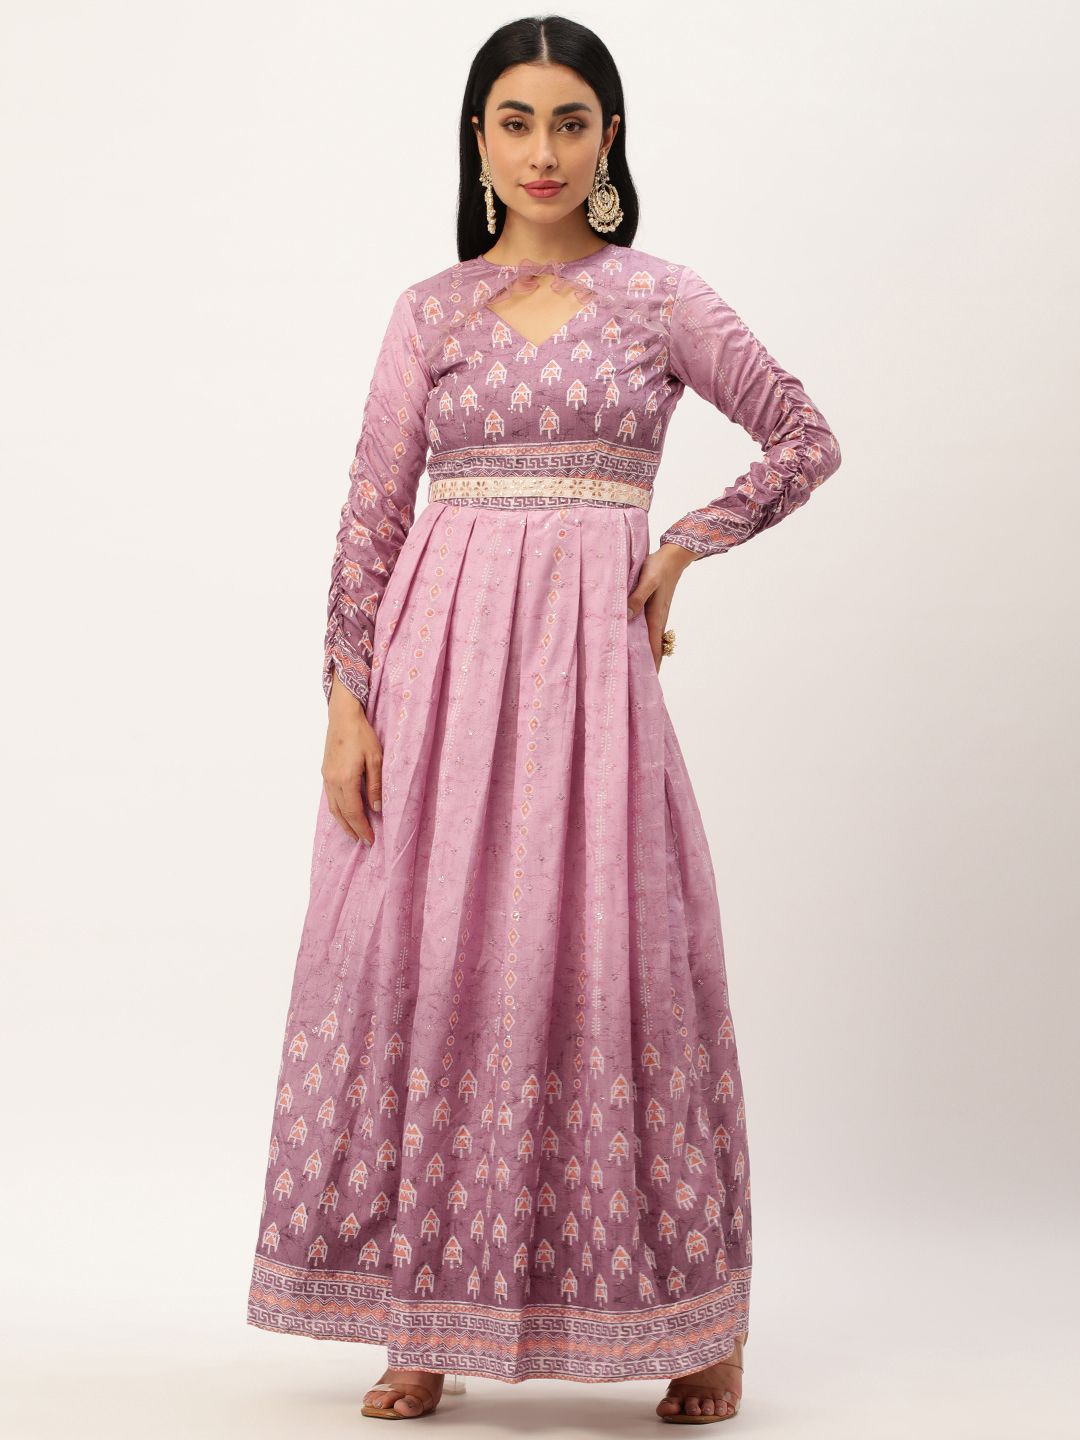 Ethnovog Ethnic Motifs Print Maxi Dress Price in India